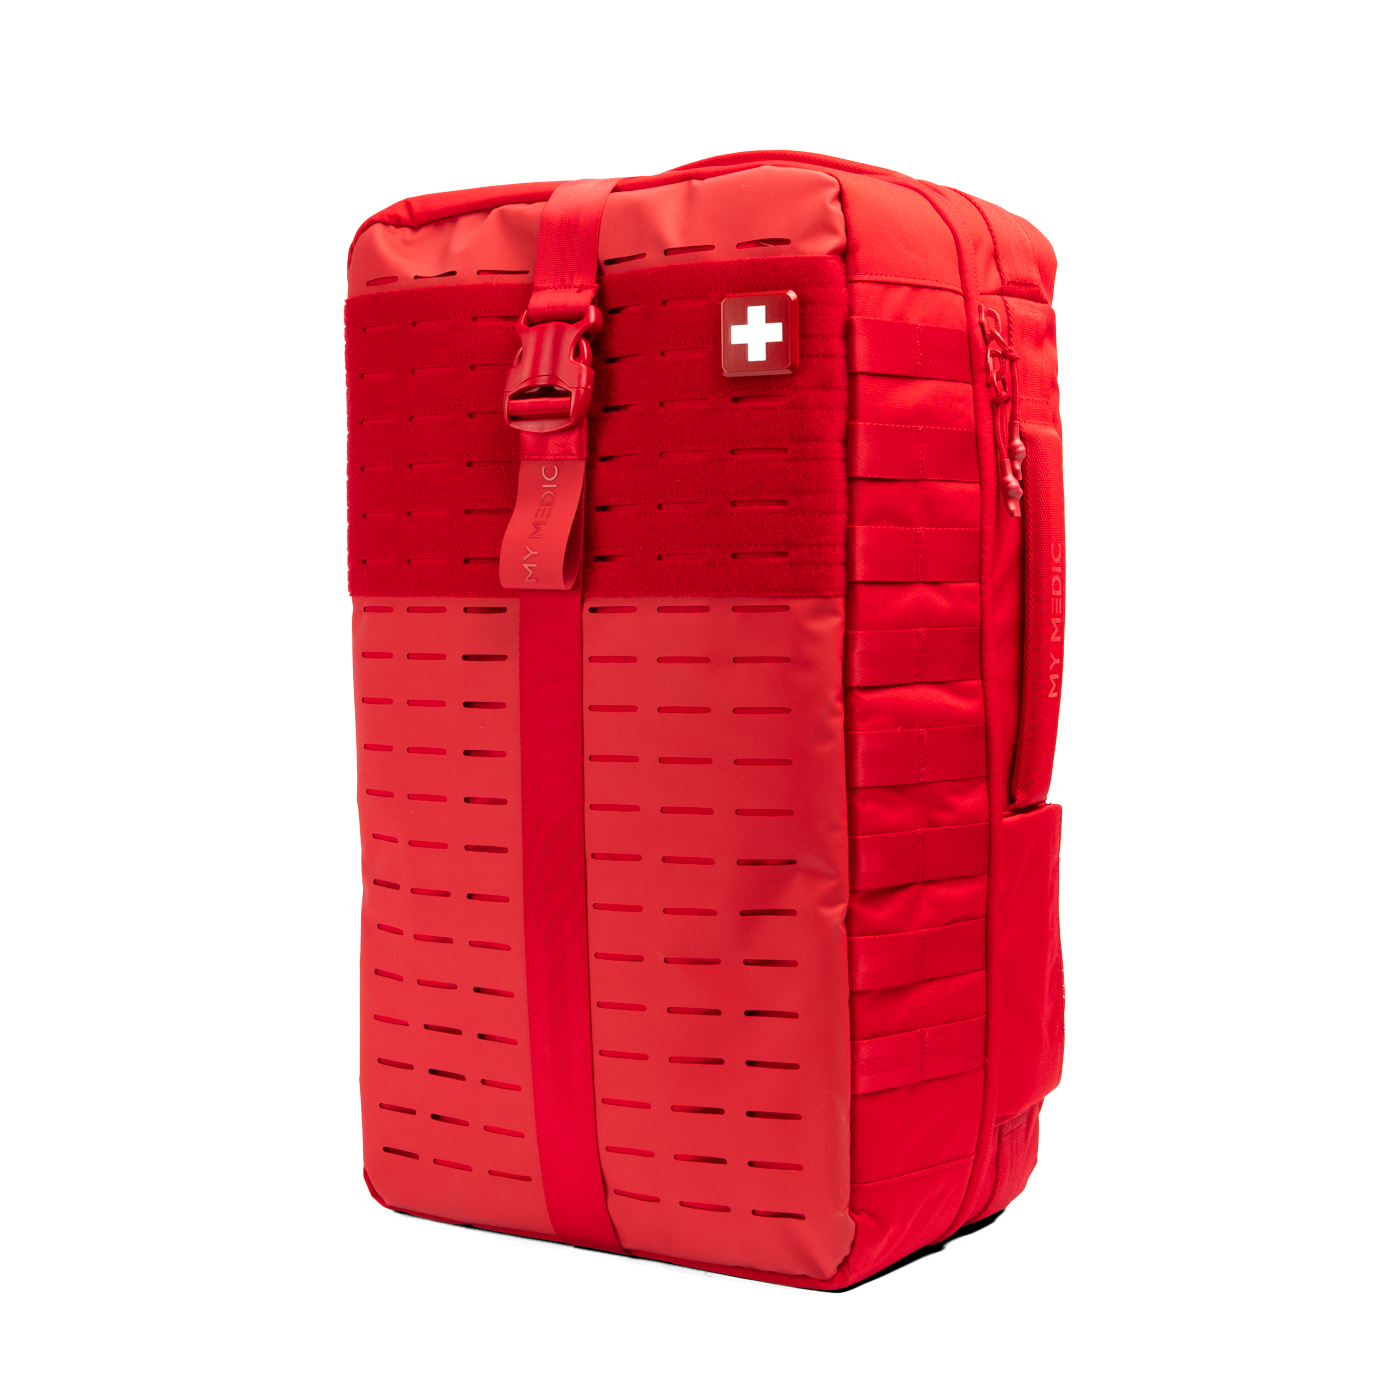 The Medic Portable Medical Kit  Pro